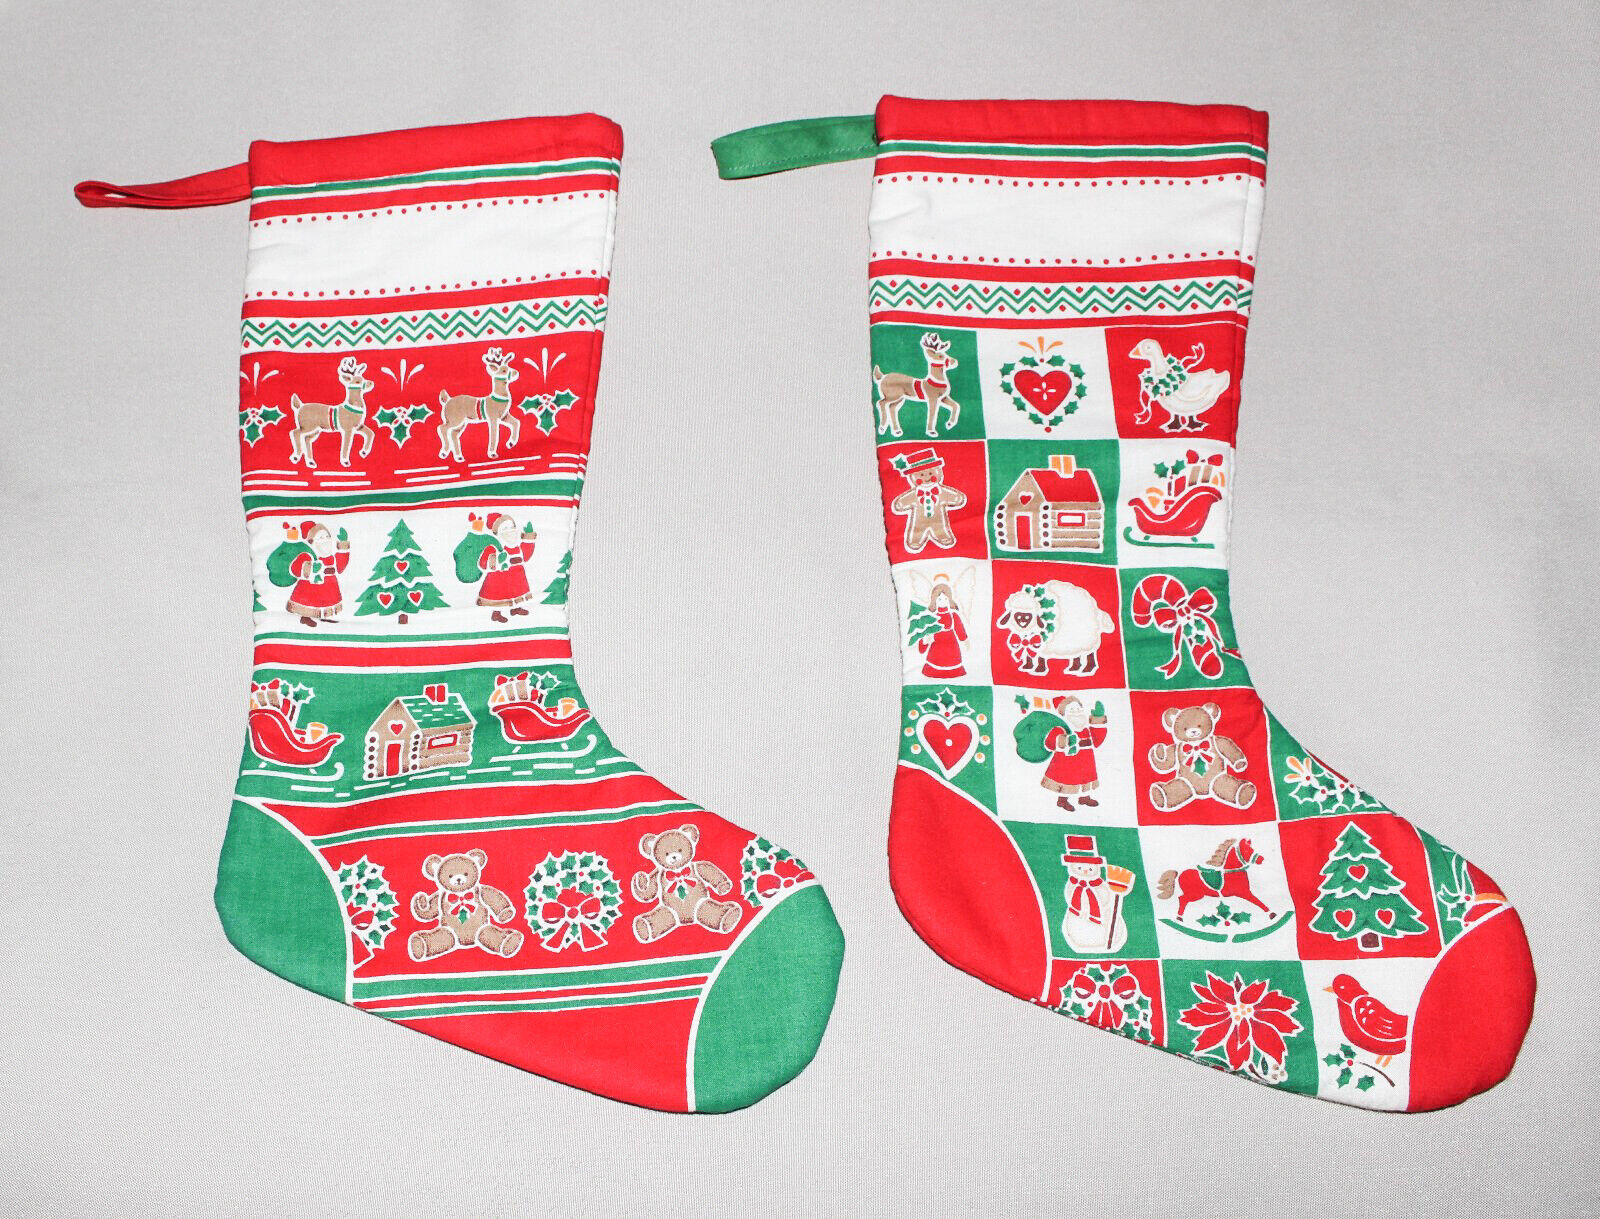 Vintage Handmade Craft Pattern Christmas Stockings (2) Red Green White 15” Long Handmade